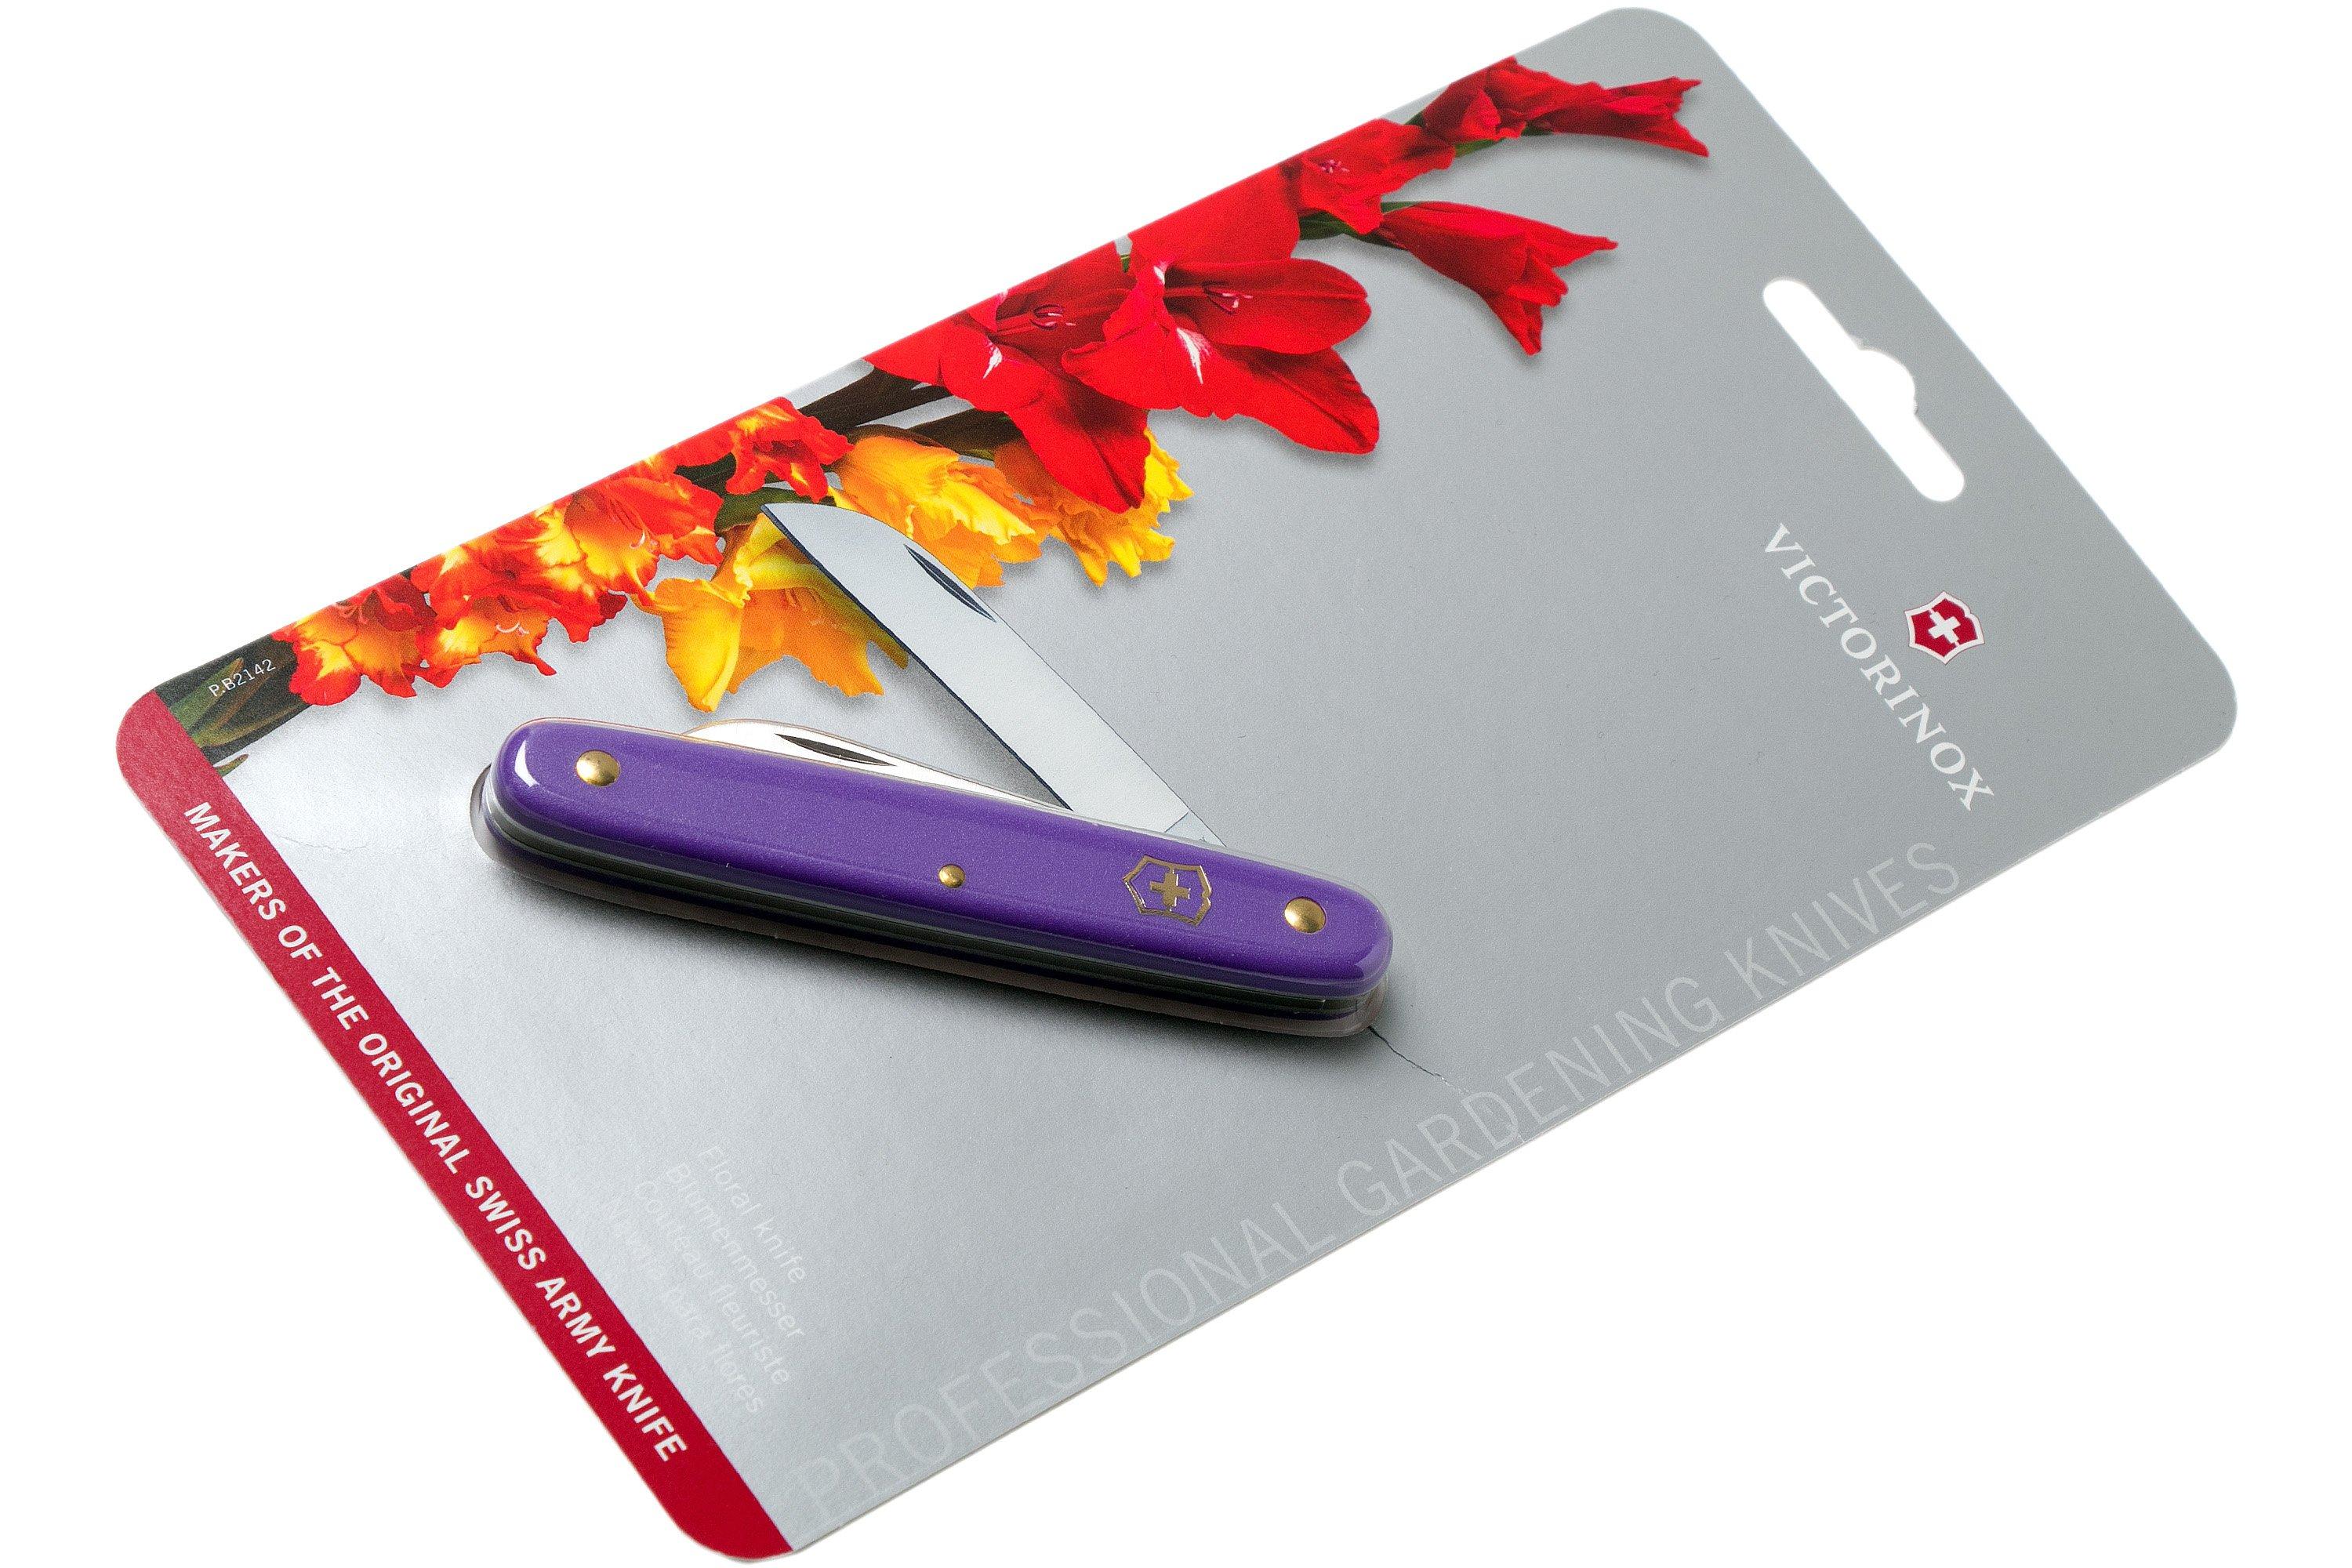 Floral Knife Purple 